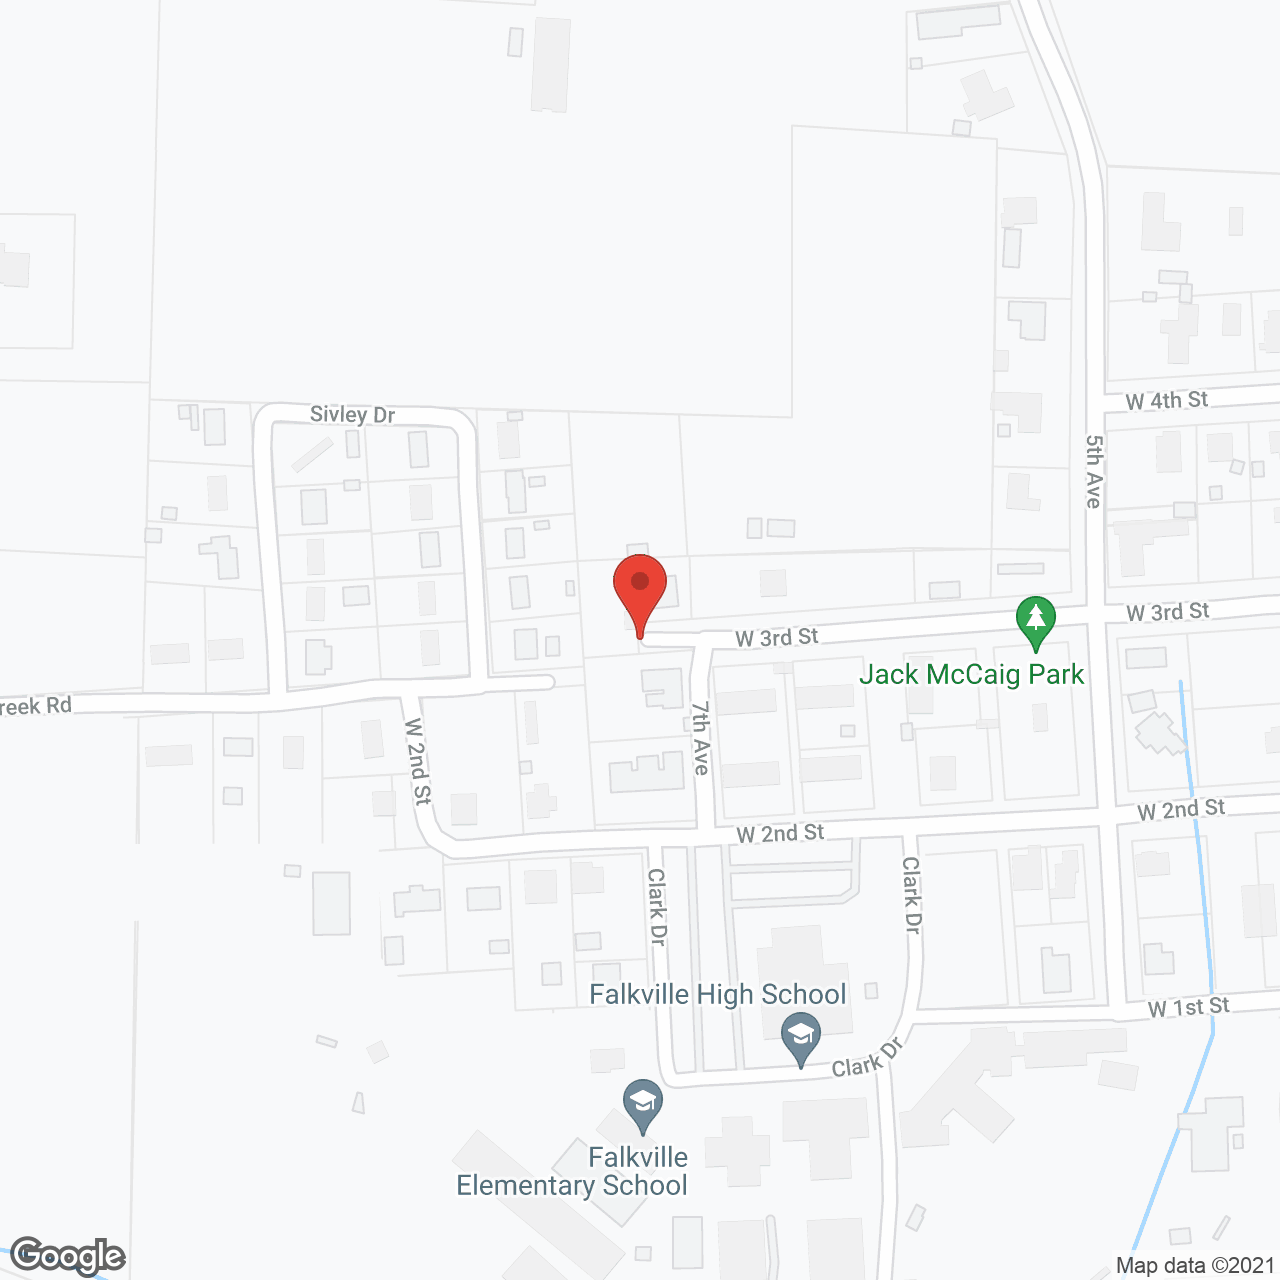 Falkville Healthcare Ctr in google map